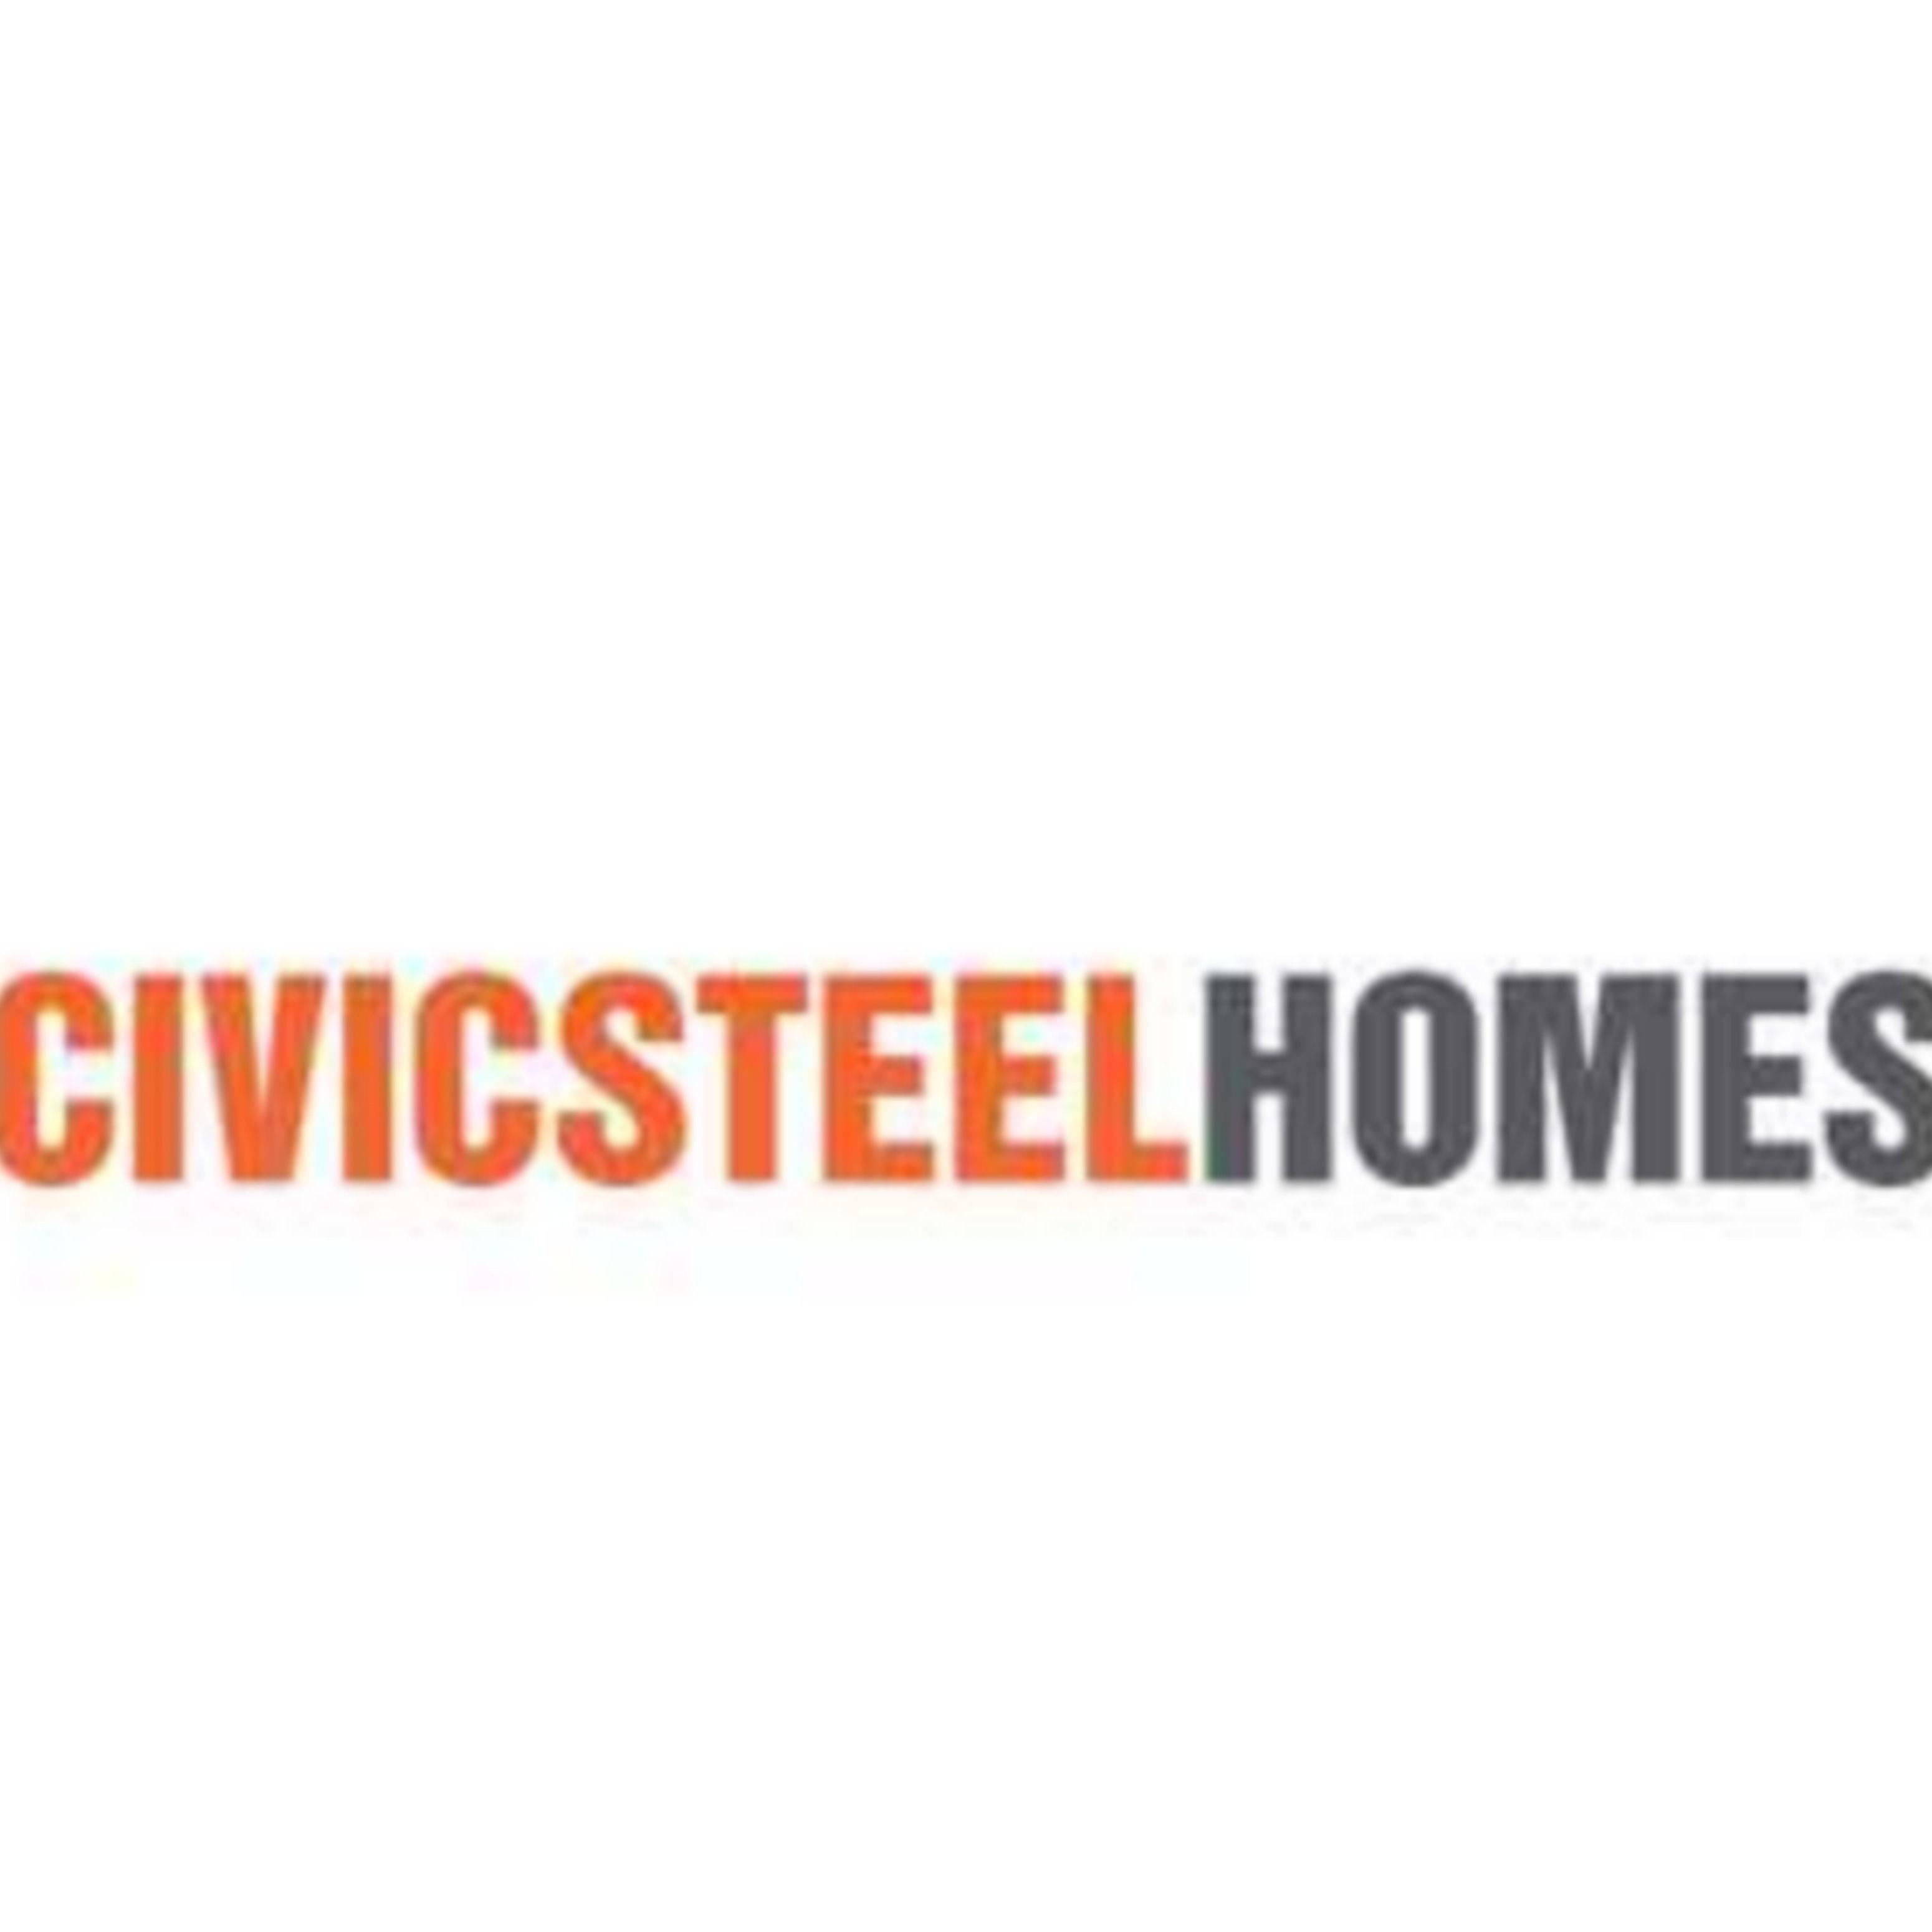 Civic  Steelhomes